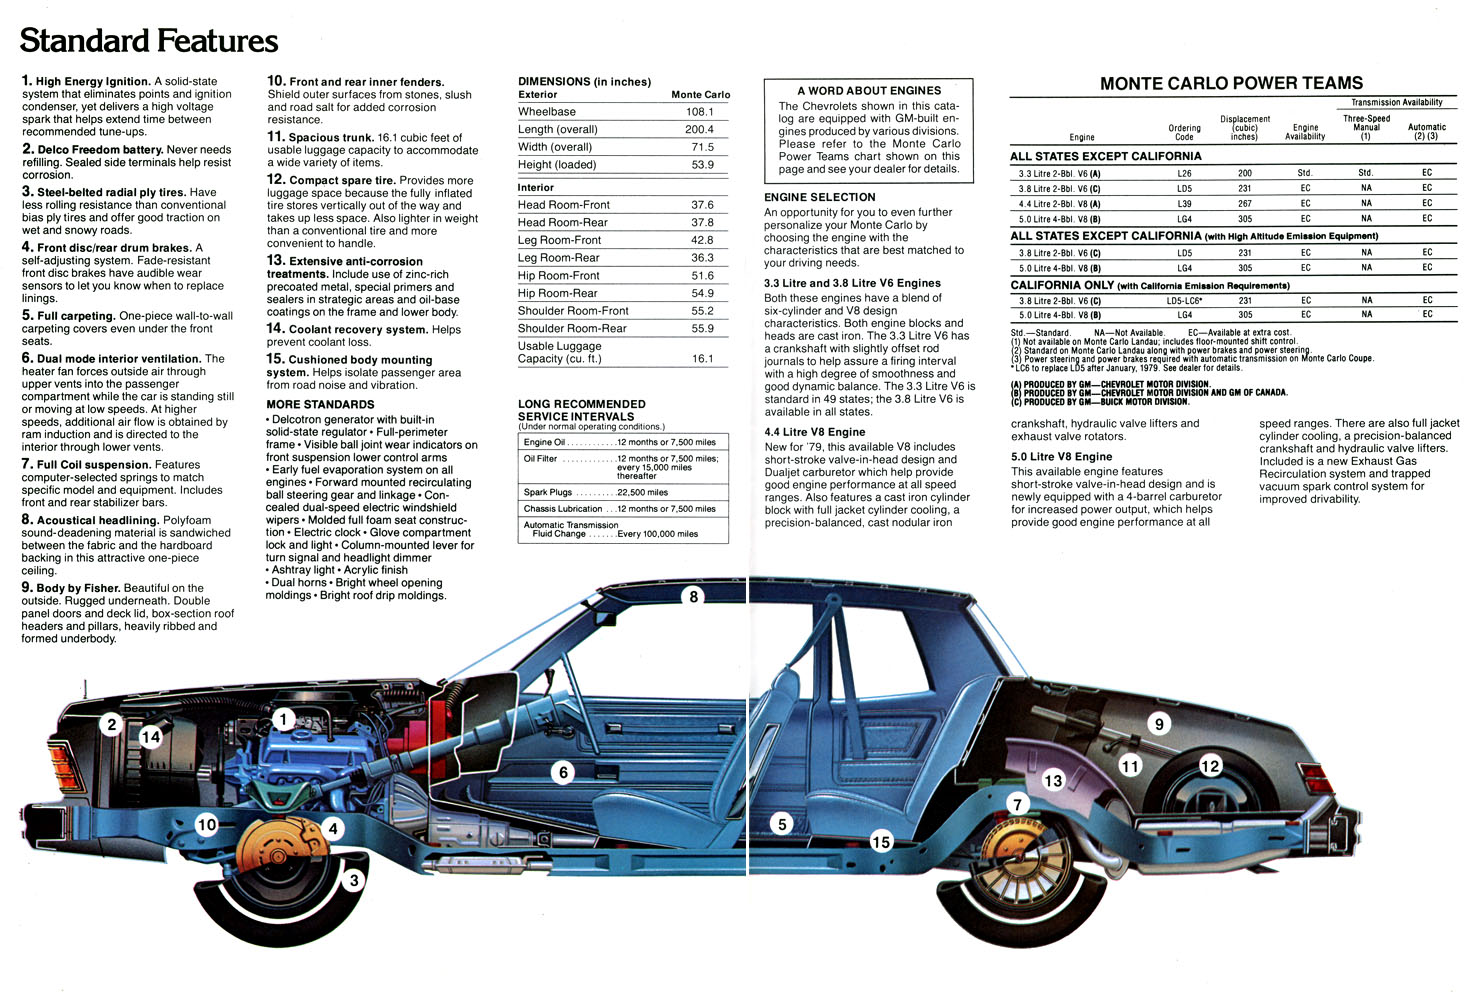 1979 Chevrolet Monte Carlo-08 amp 09